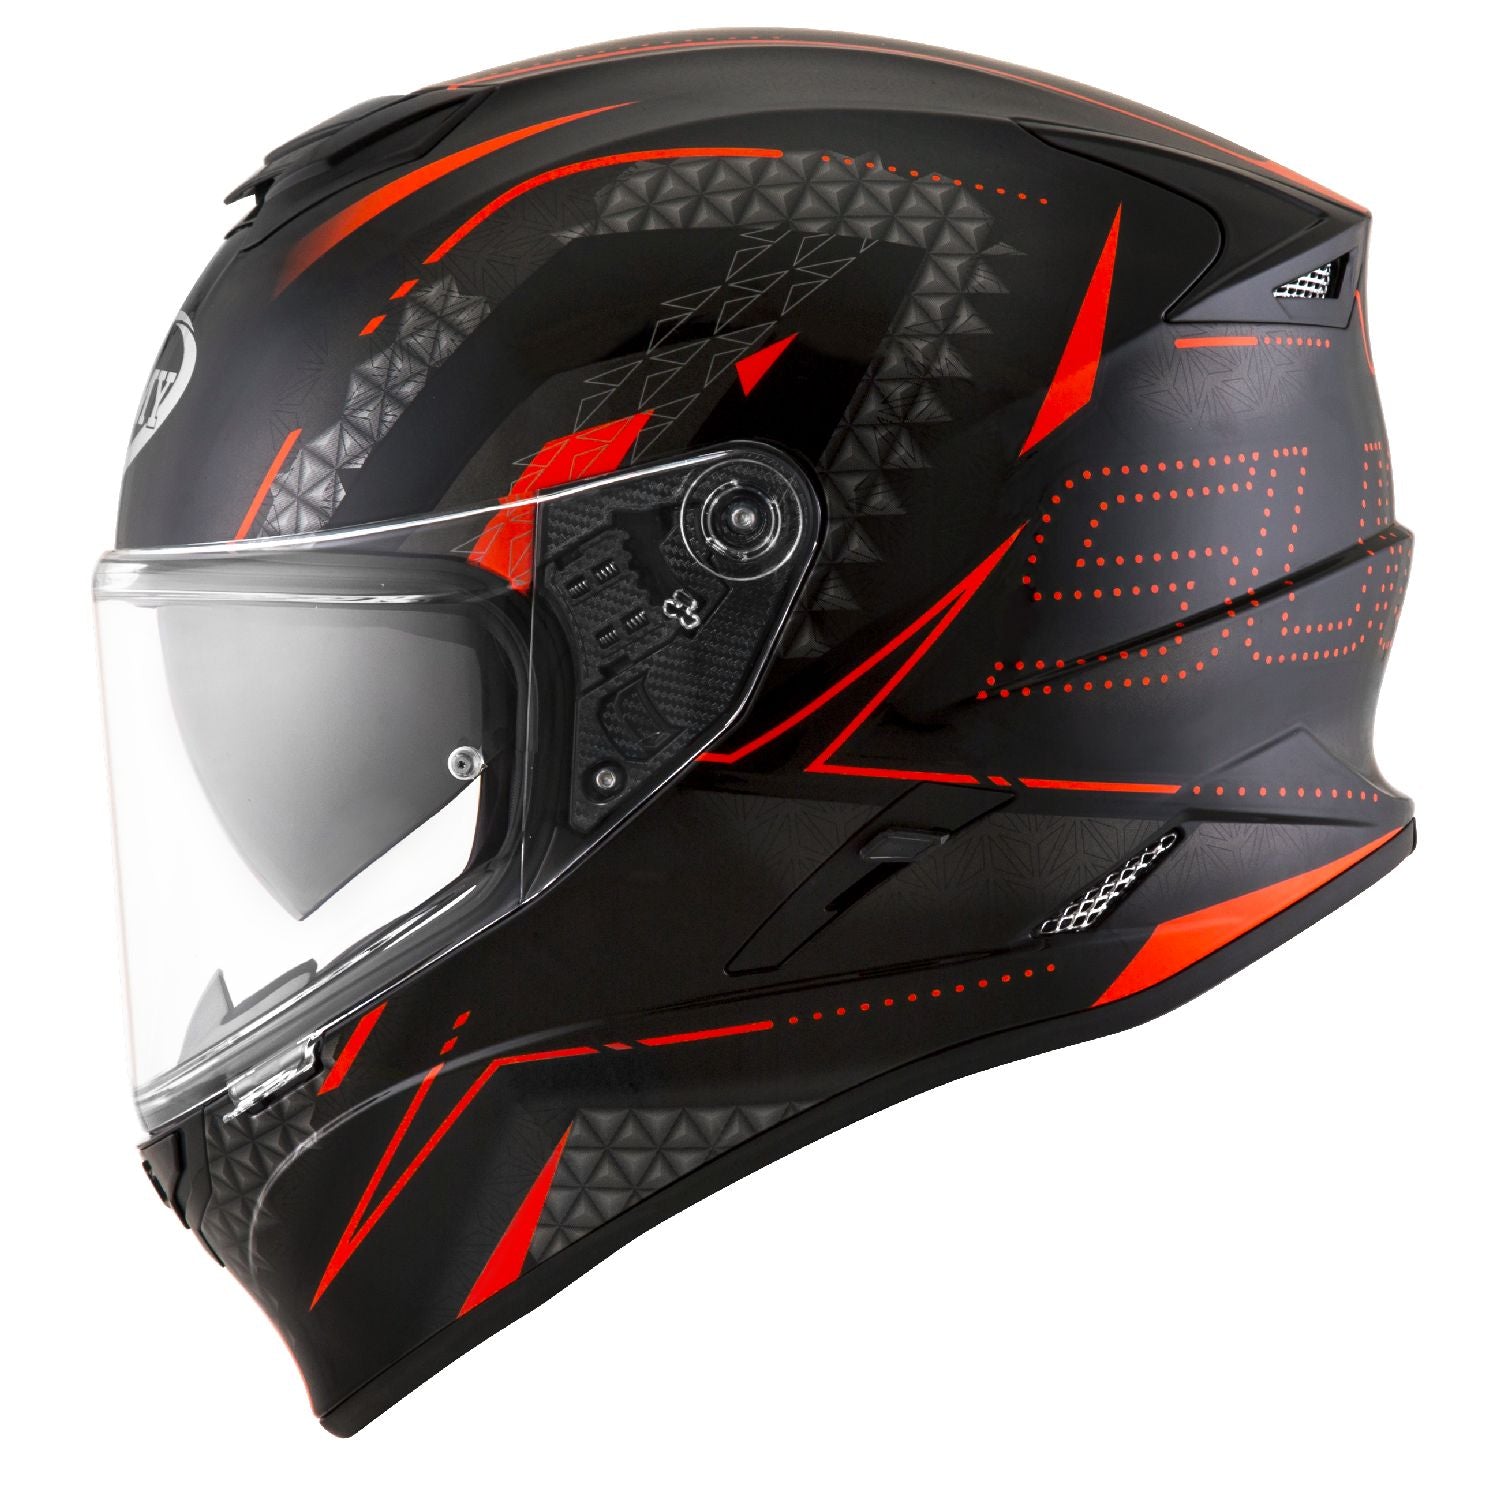 Suomy Stellar Shade Black Red Full Face Motorcycle Helmet (XS - 2XL)